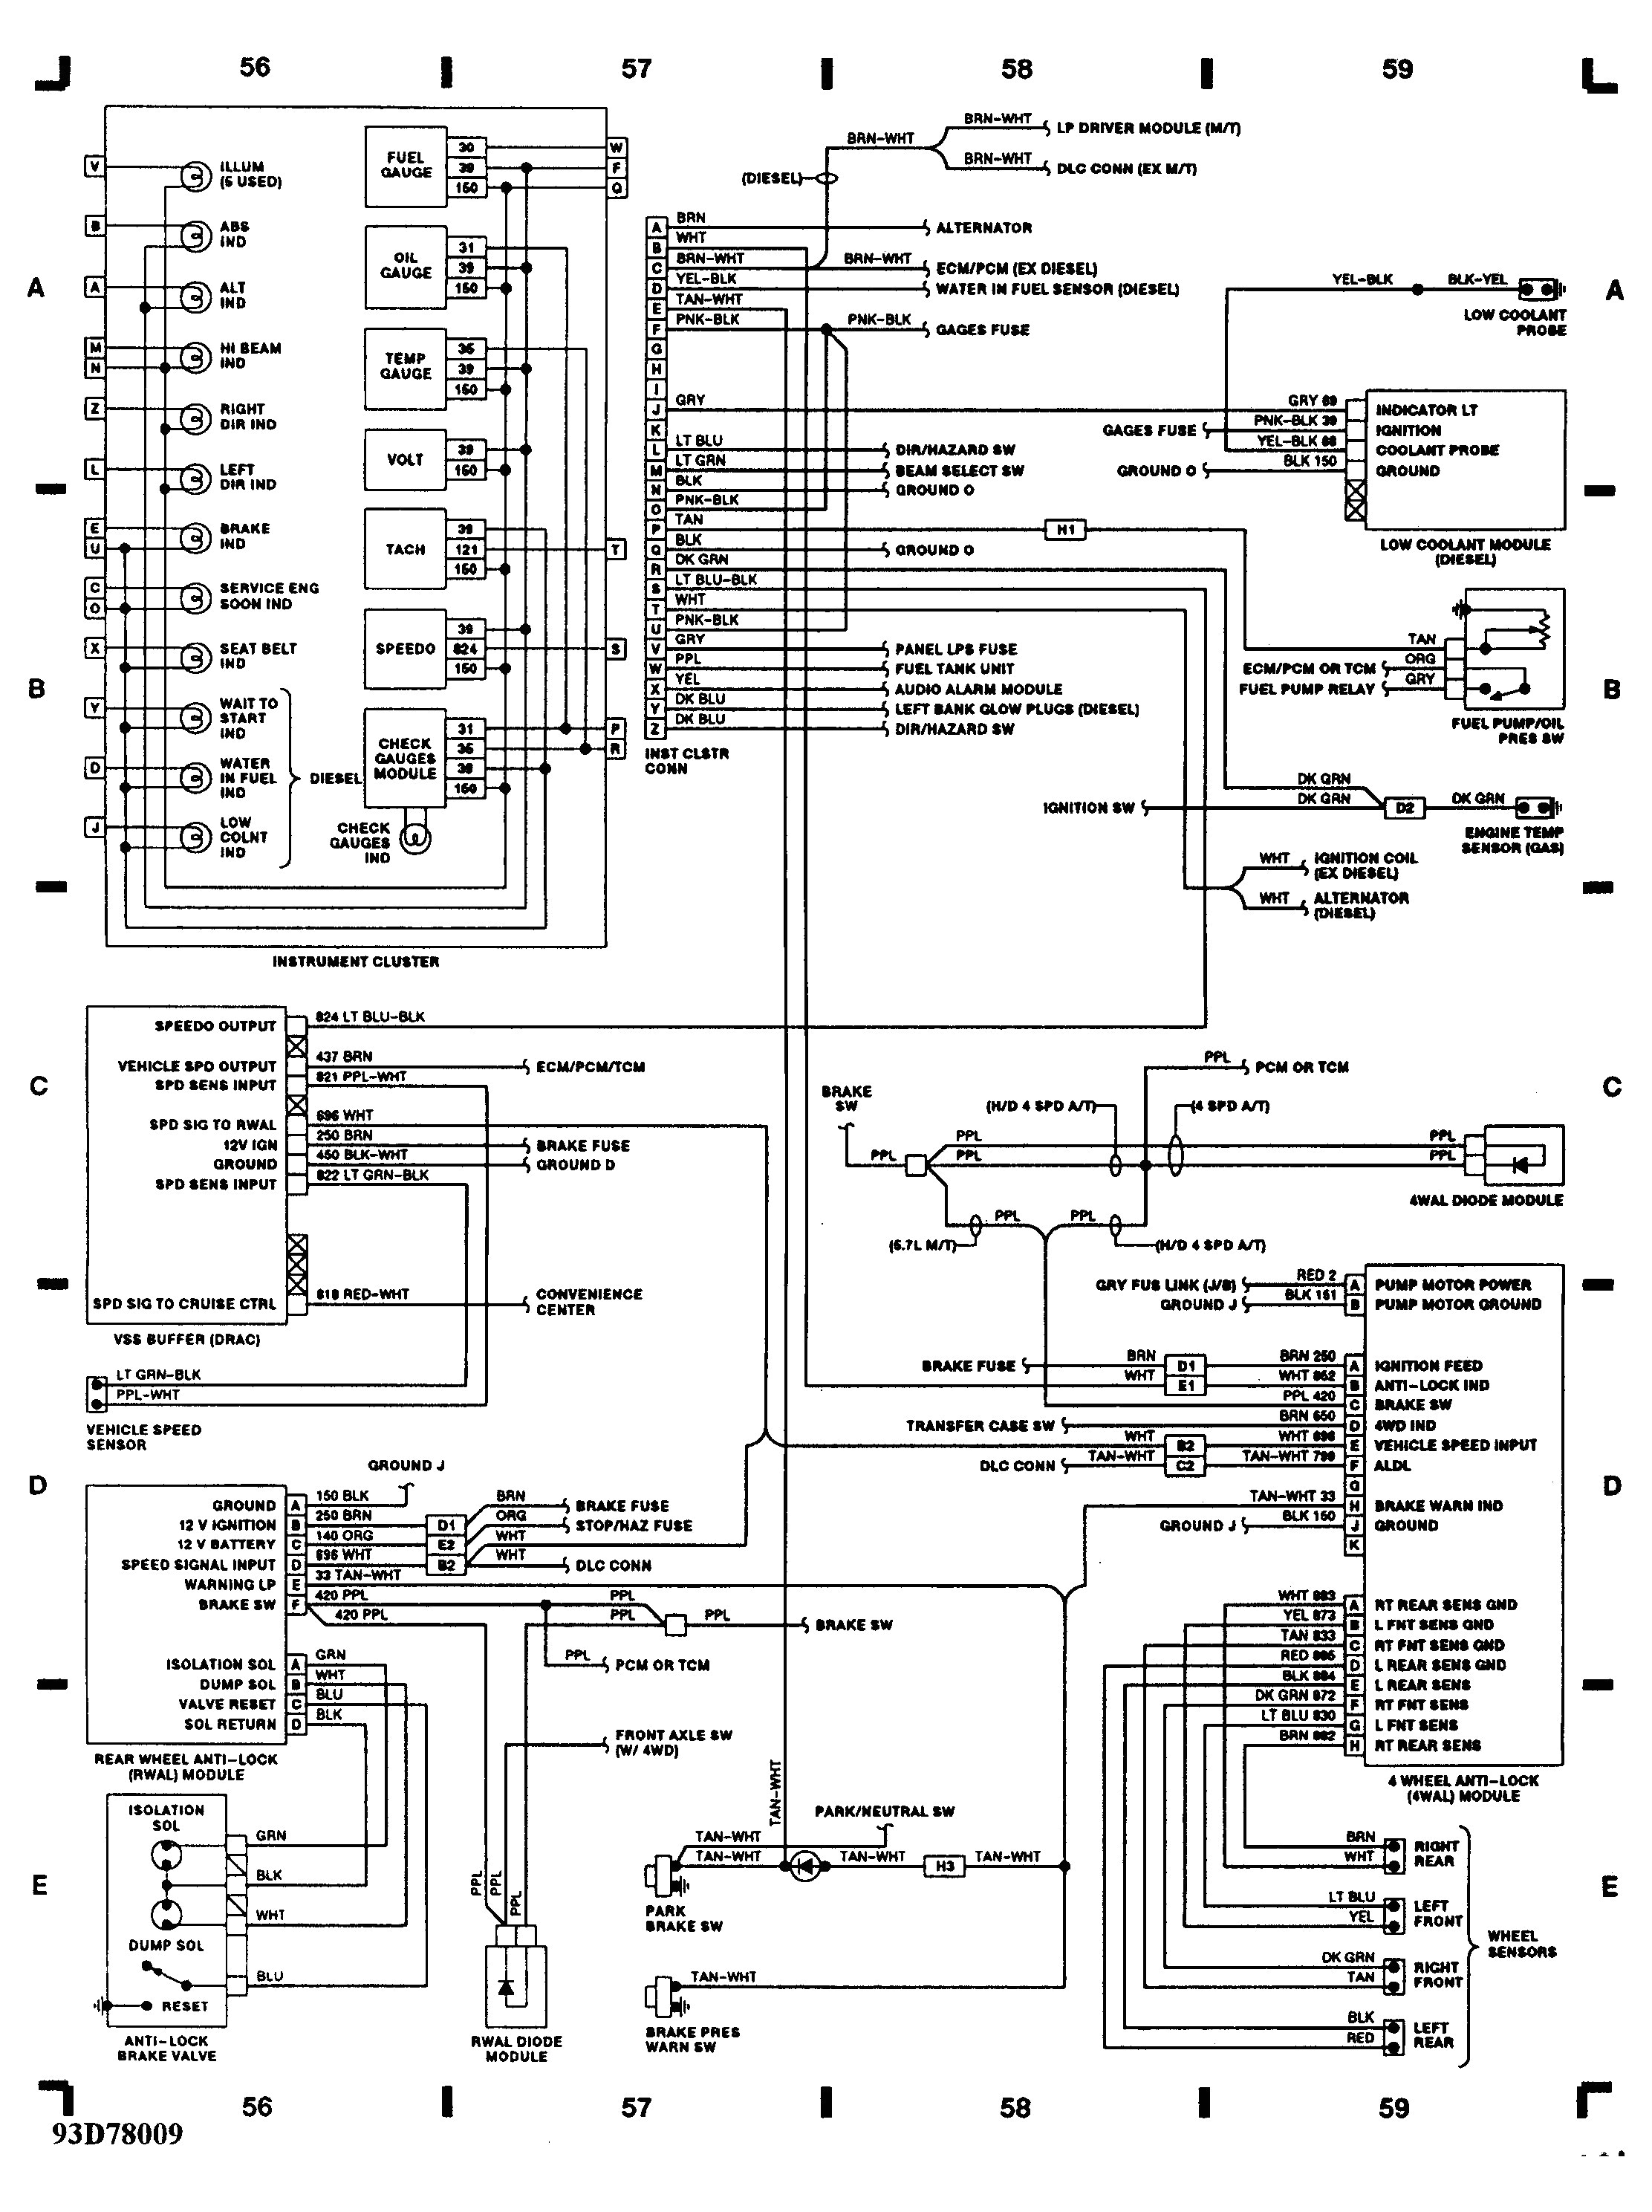 1993 gmc transmission diagram wiring diagrams 2005 chevy silverado transmission diagram 1993 gmc transmission diagram wiring